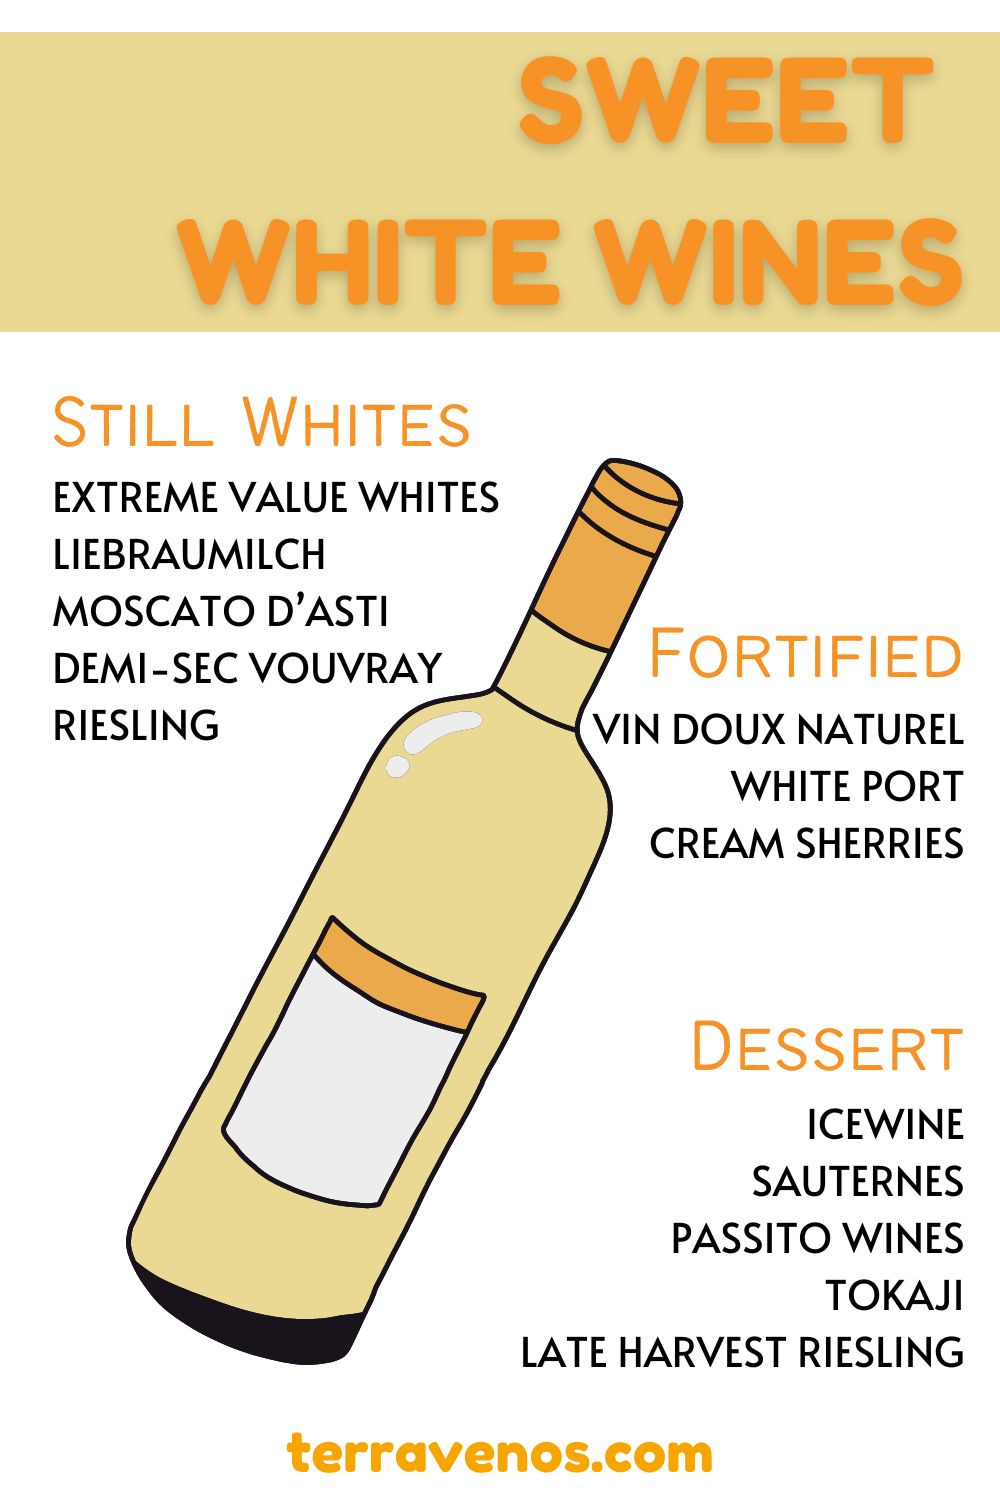 sweet white wines - infographic